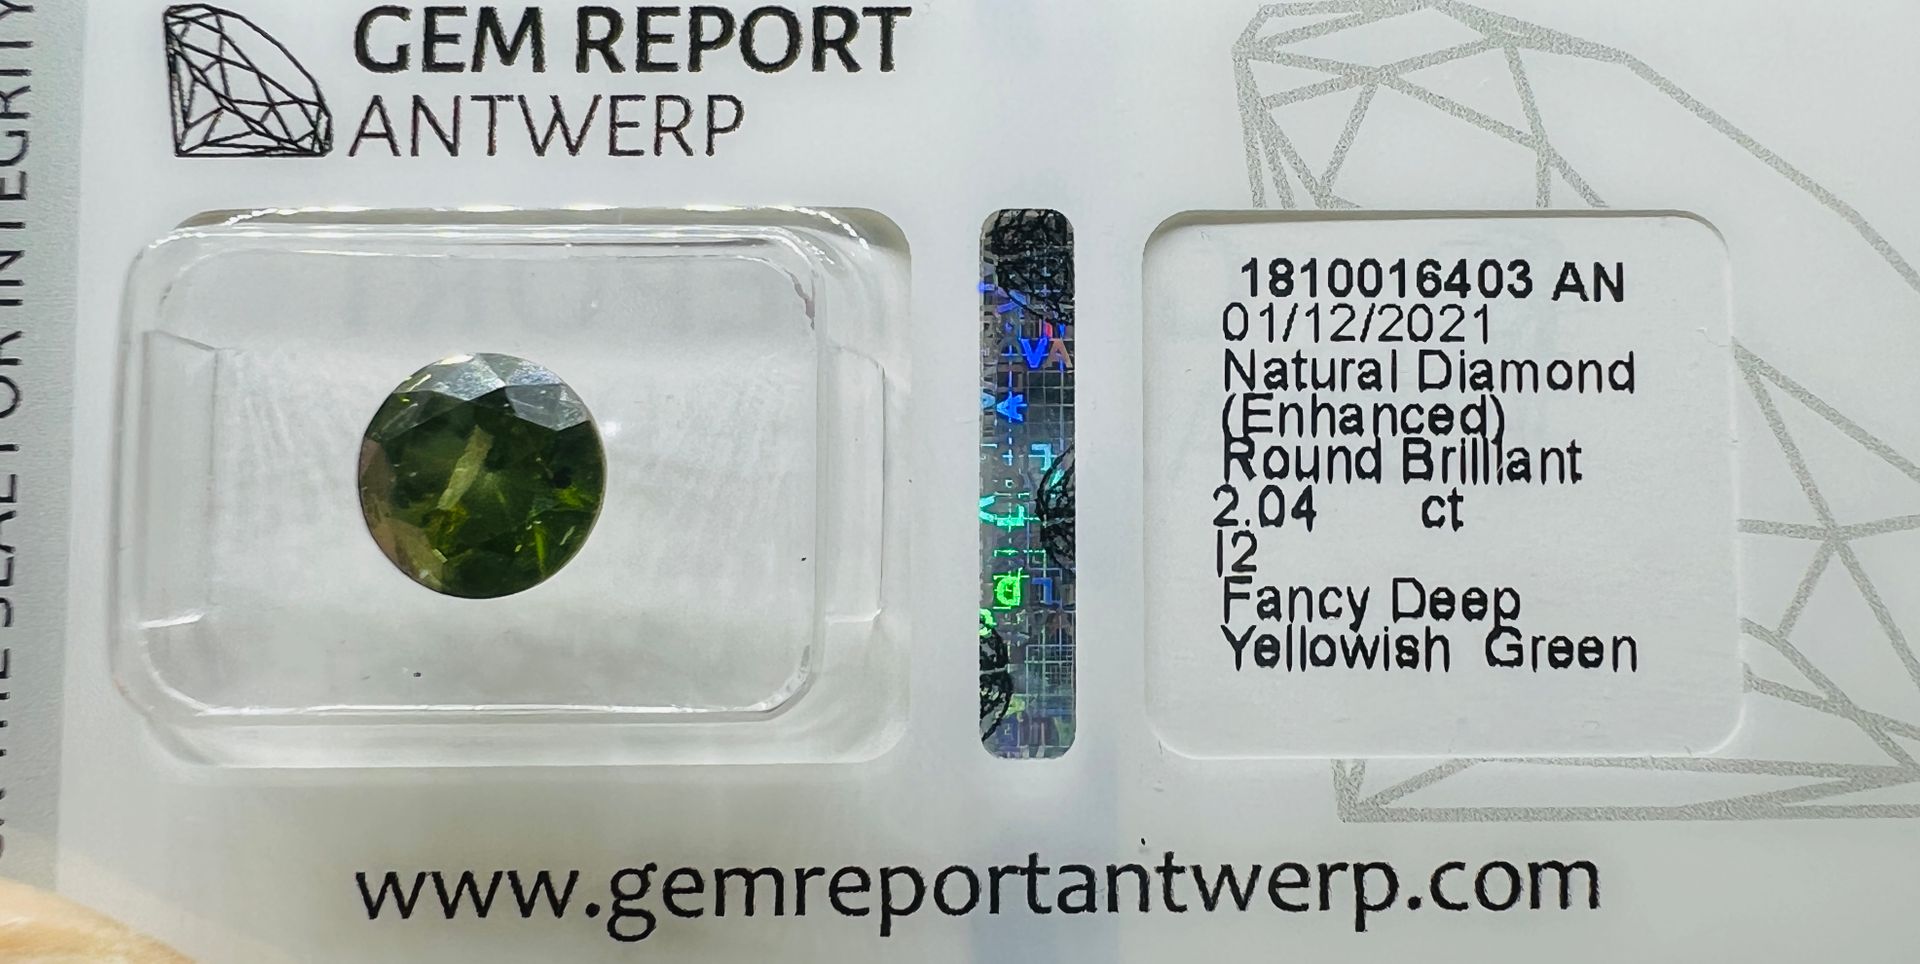 Diamant GREEN YELLOW DIAMOND of 2.04 Carats, GEM REPORT certificate